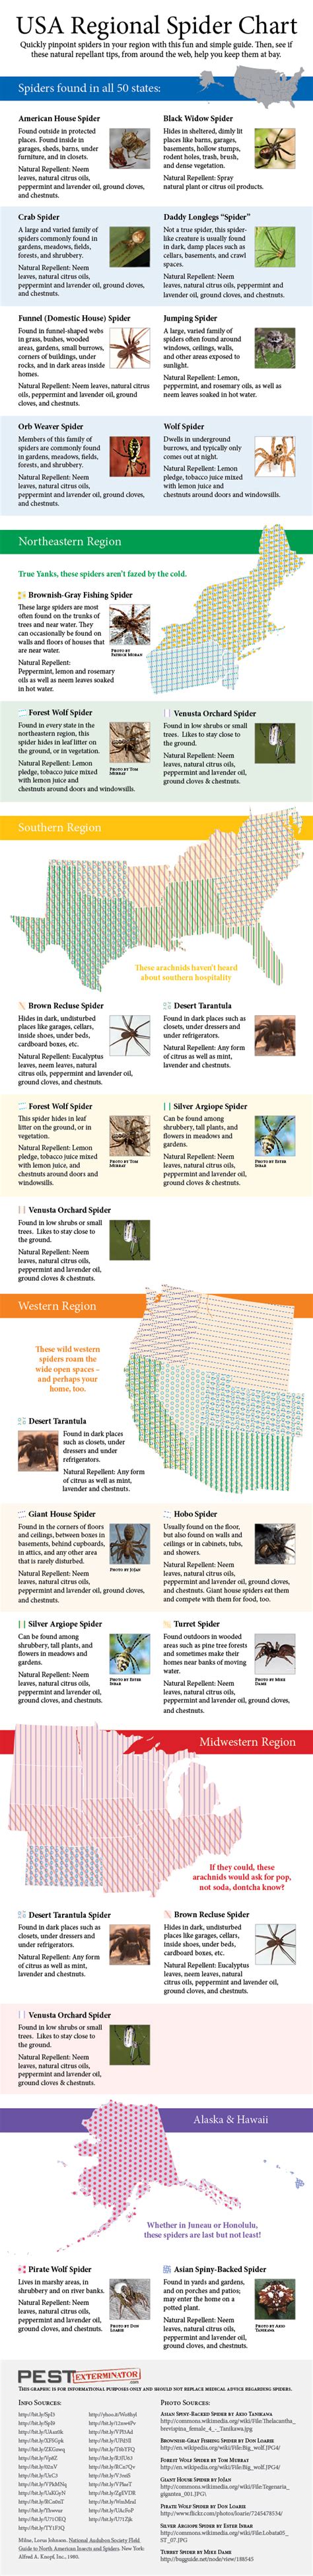 Usa Spider Identification Chart Visually